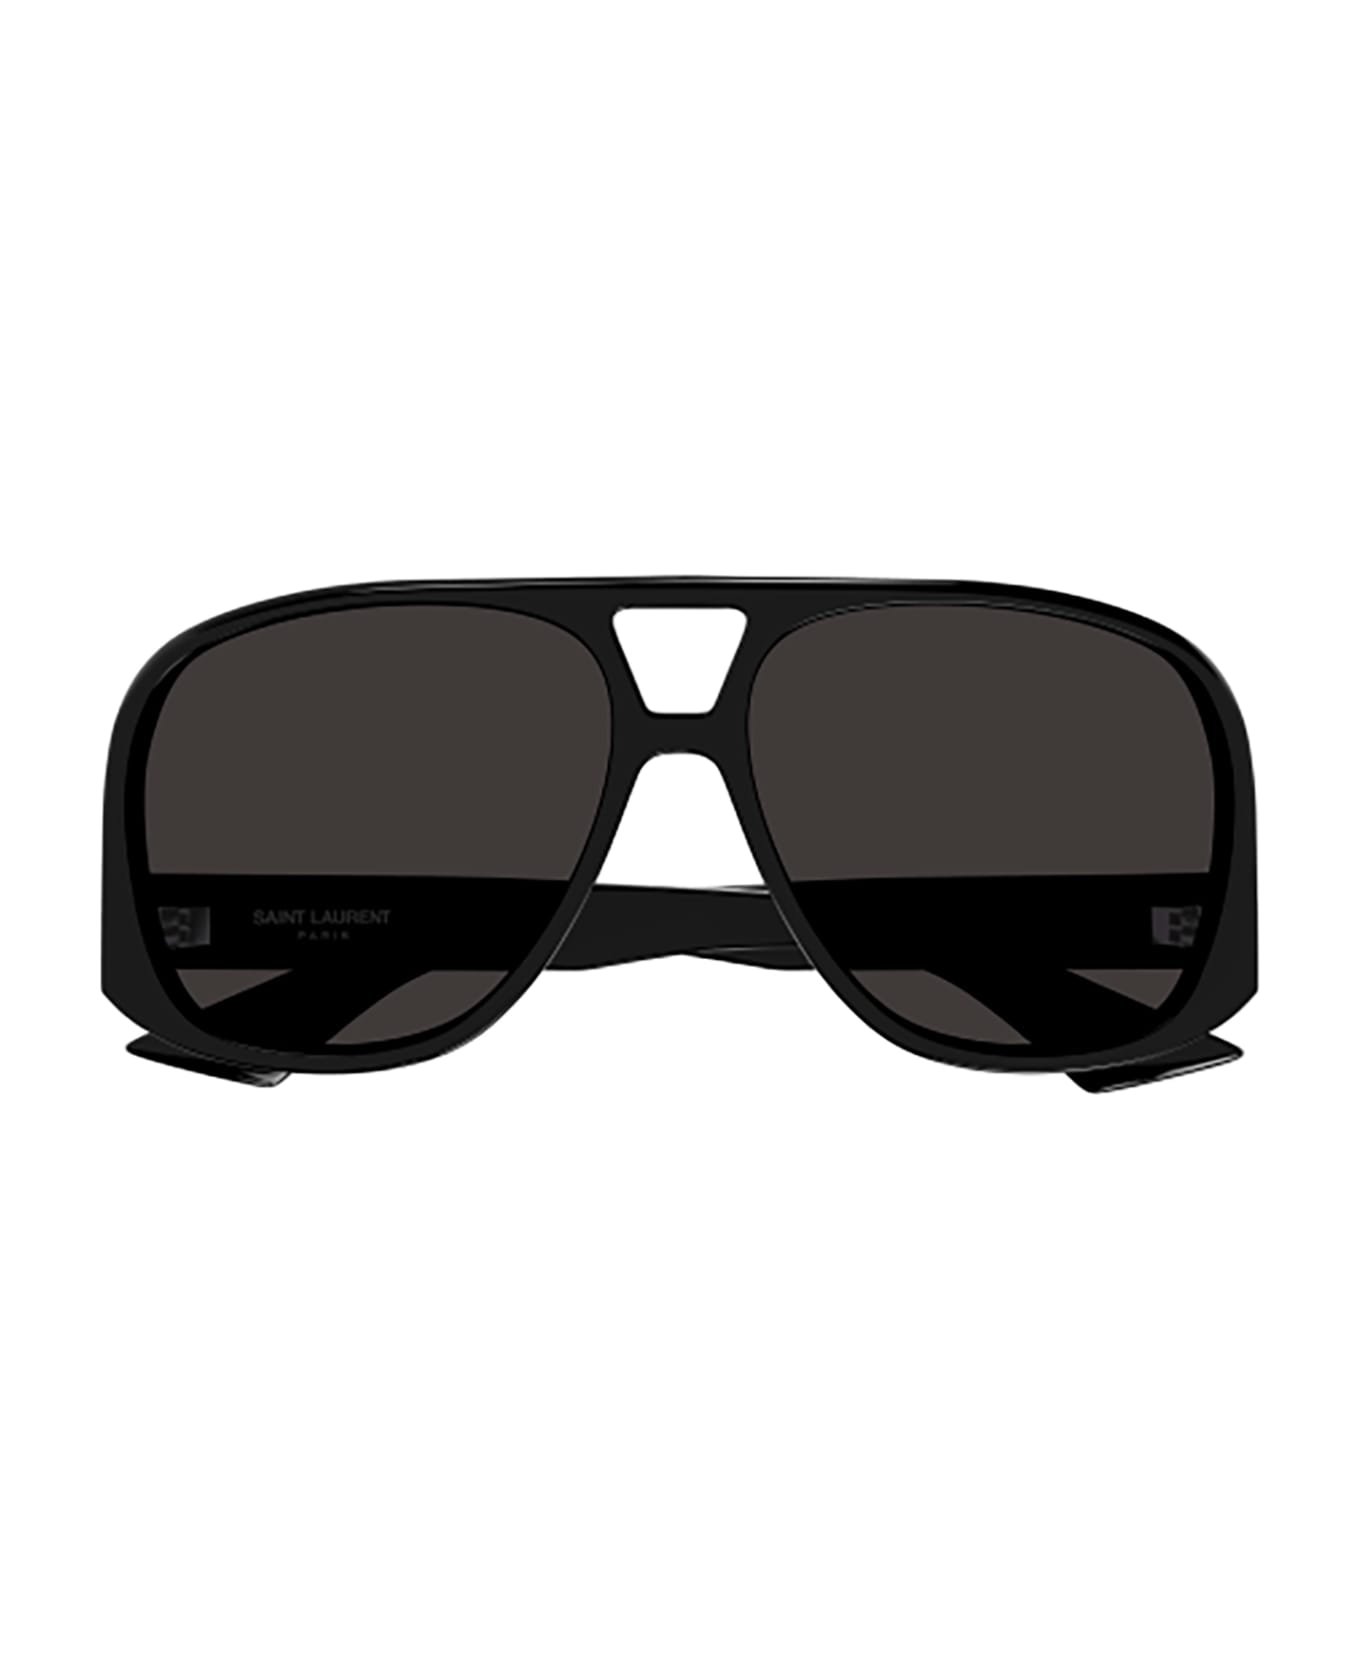 Saint Laurent Eyewear SL 652 SOLACE Sunglasses - Black Black Black